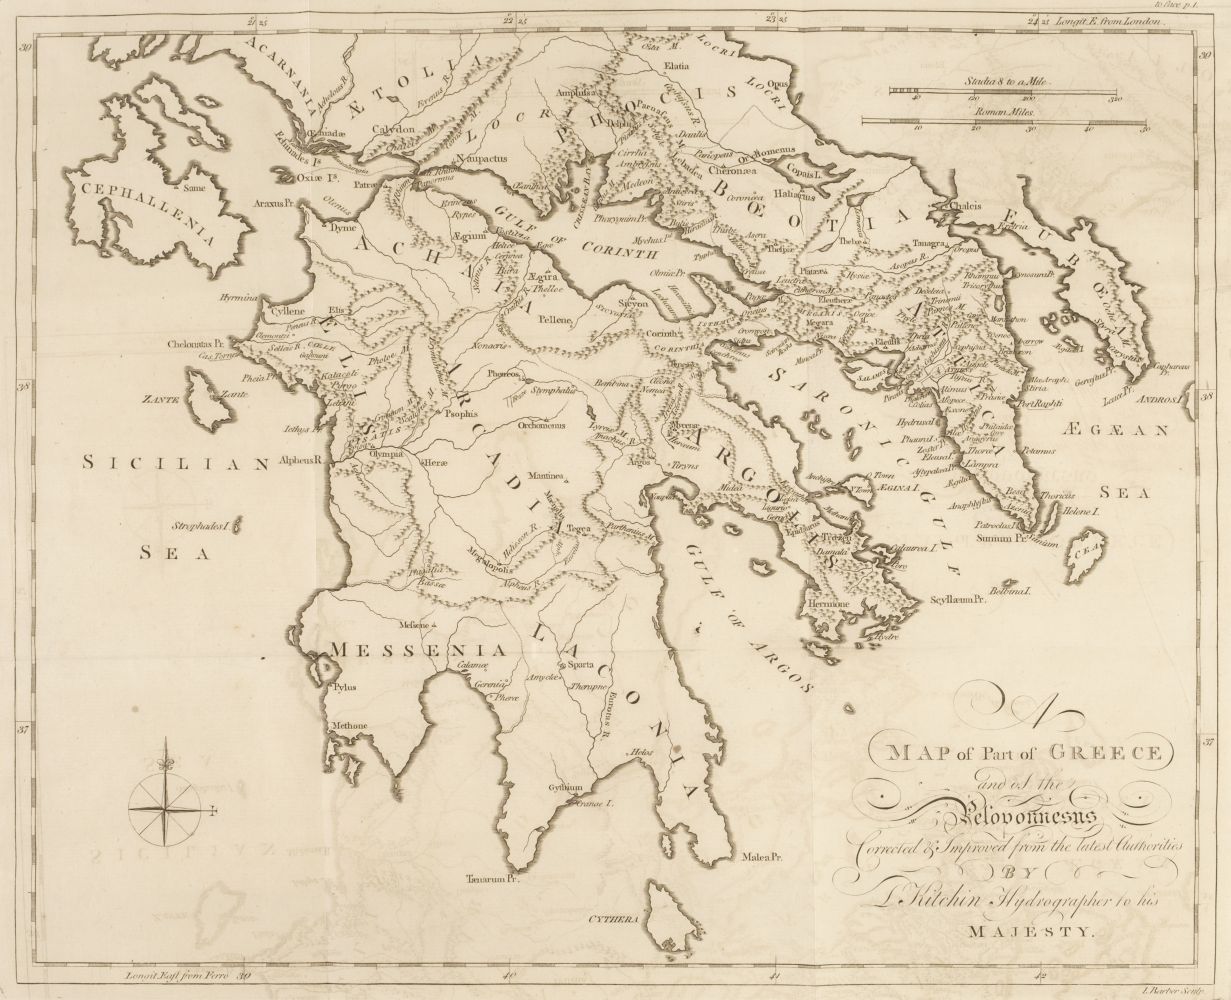 Chandler (Richard). Travels in Greece, 1776